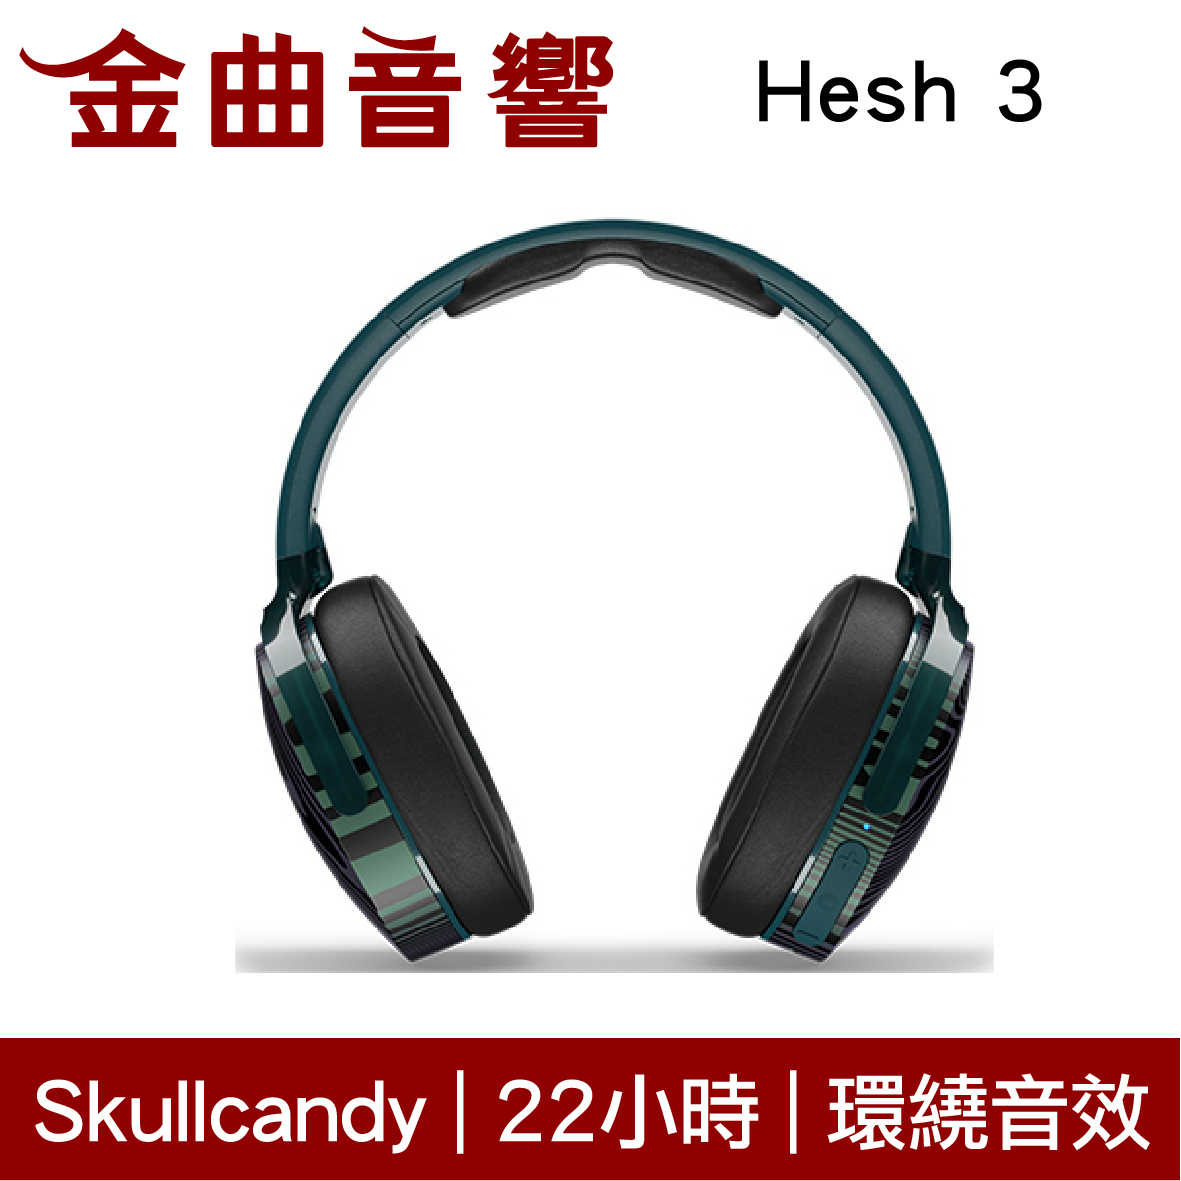 Skullcandy 骷髏糖 hesh 3 綠 藍芽 快充 內建麥克風 耳罩式 耳機  | 金曲音響